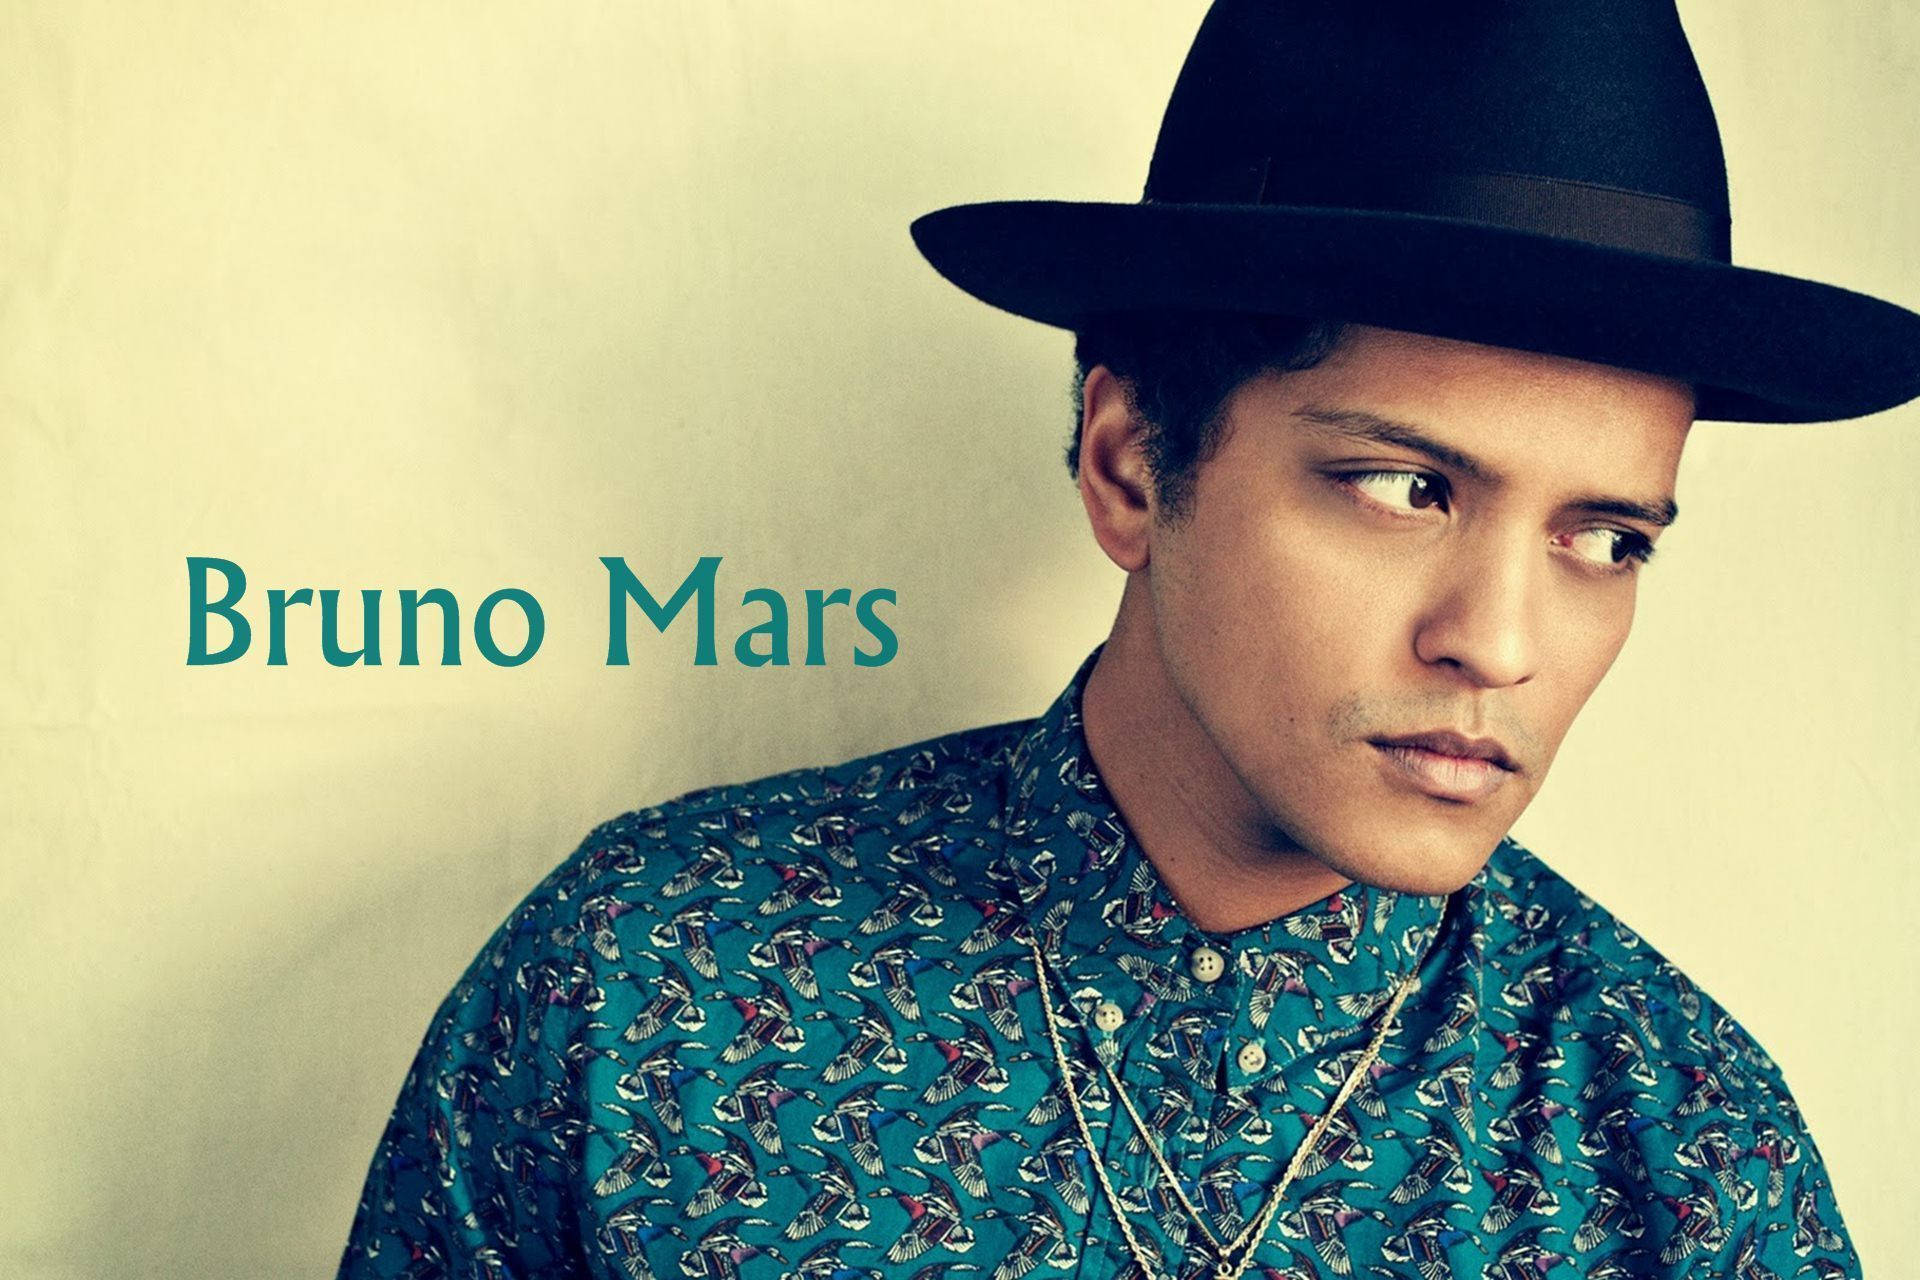 Bruno Mars Showin' Attitude With Those Side-eyes Background